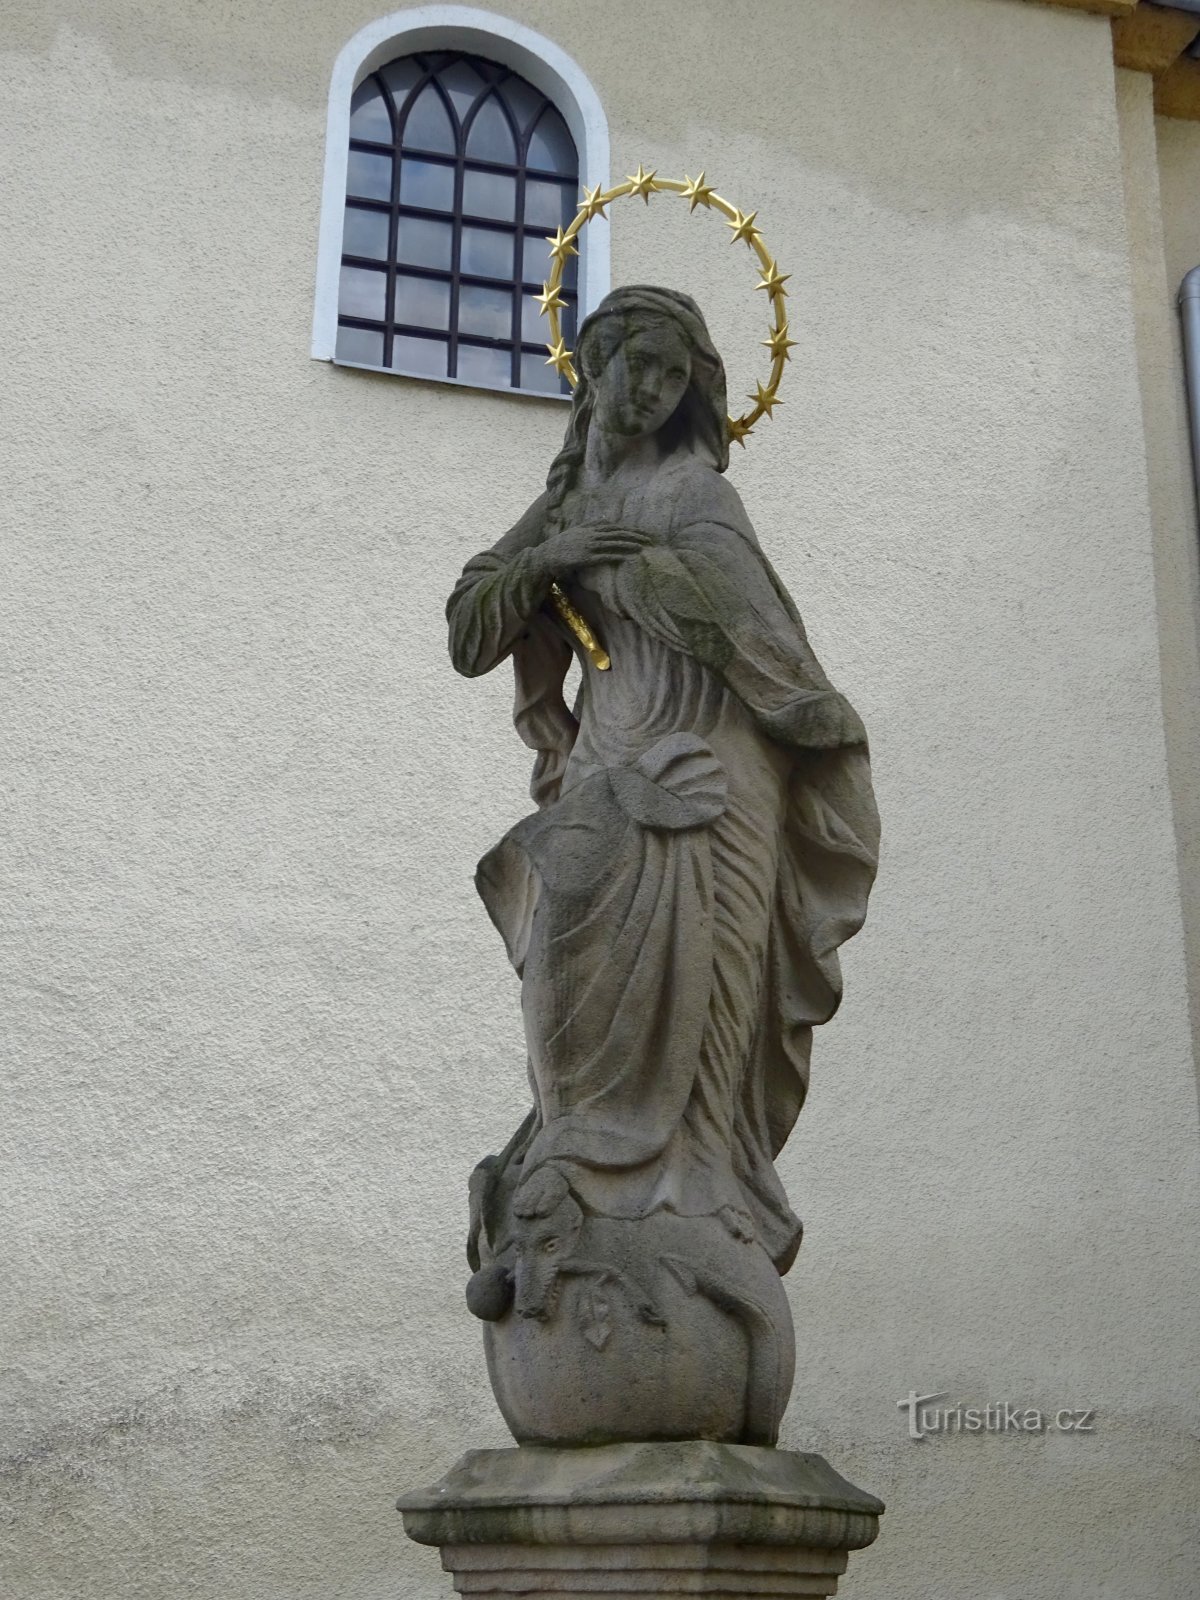 Klimkovice - statue of the Virgin Mary